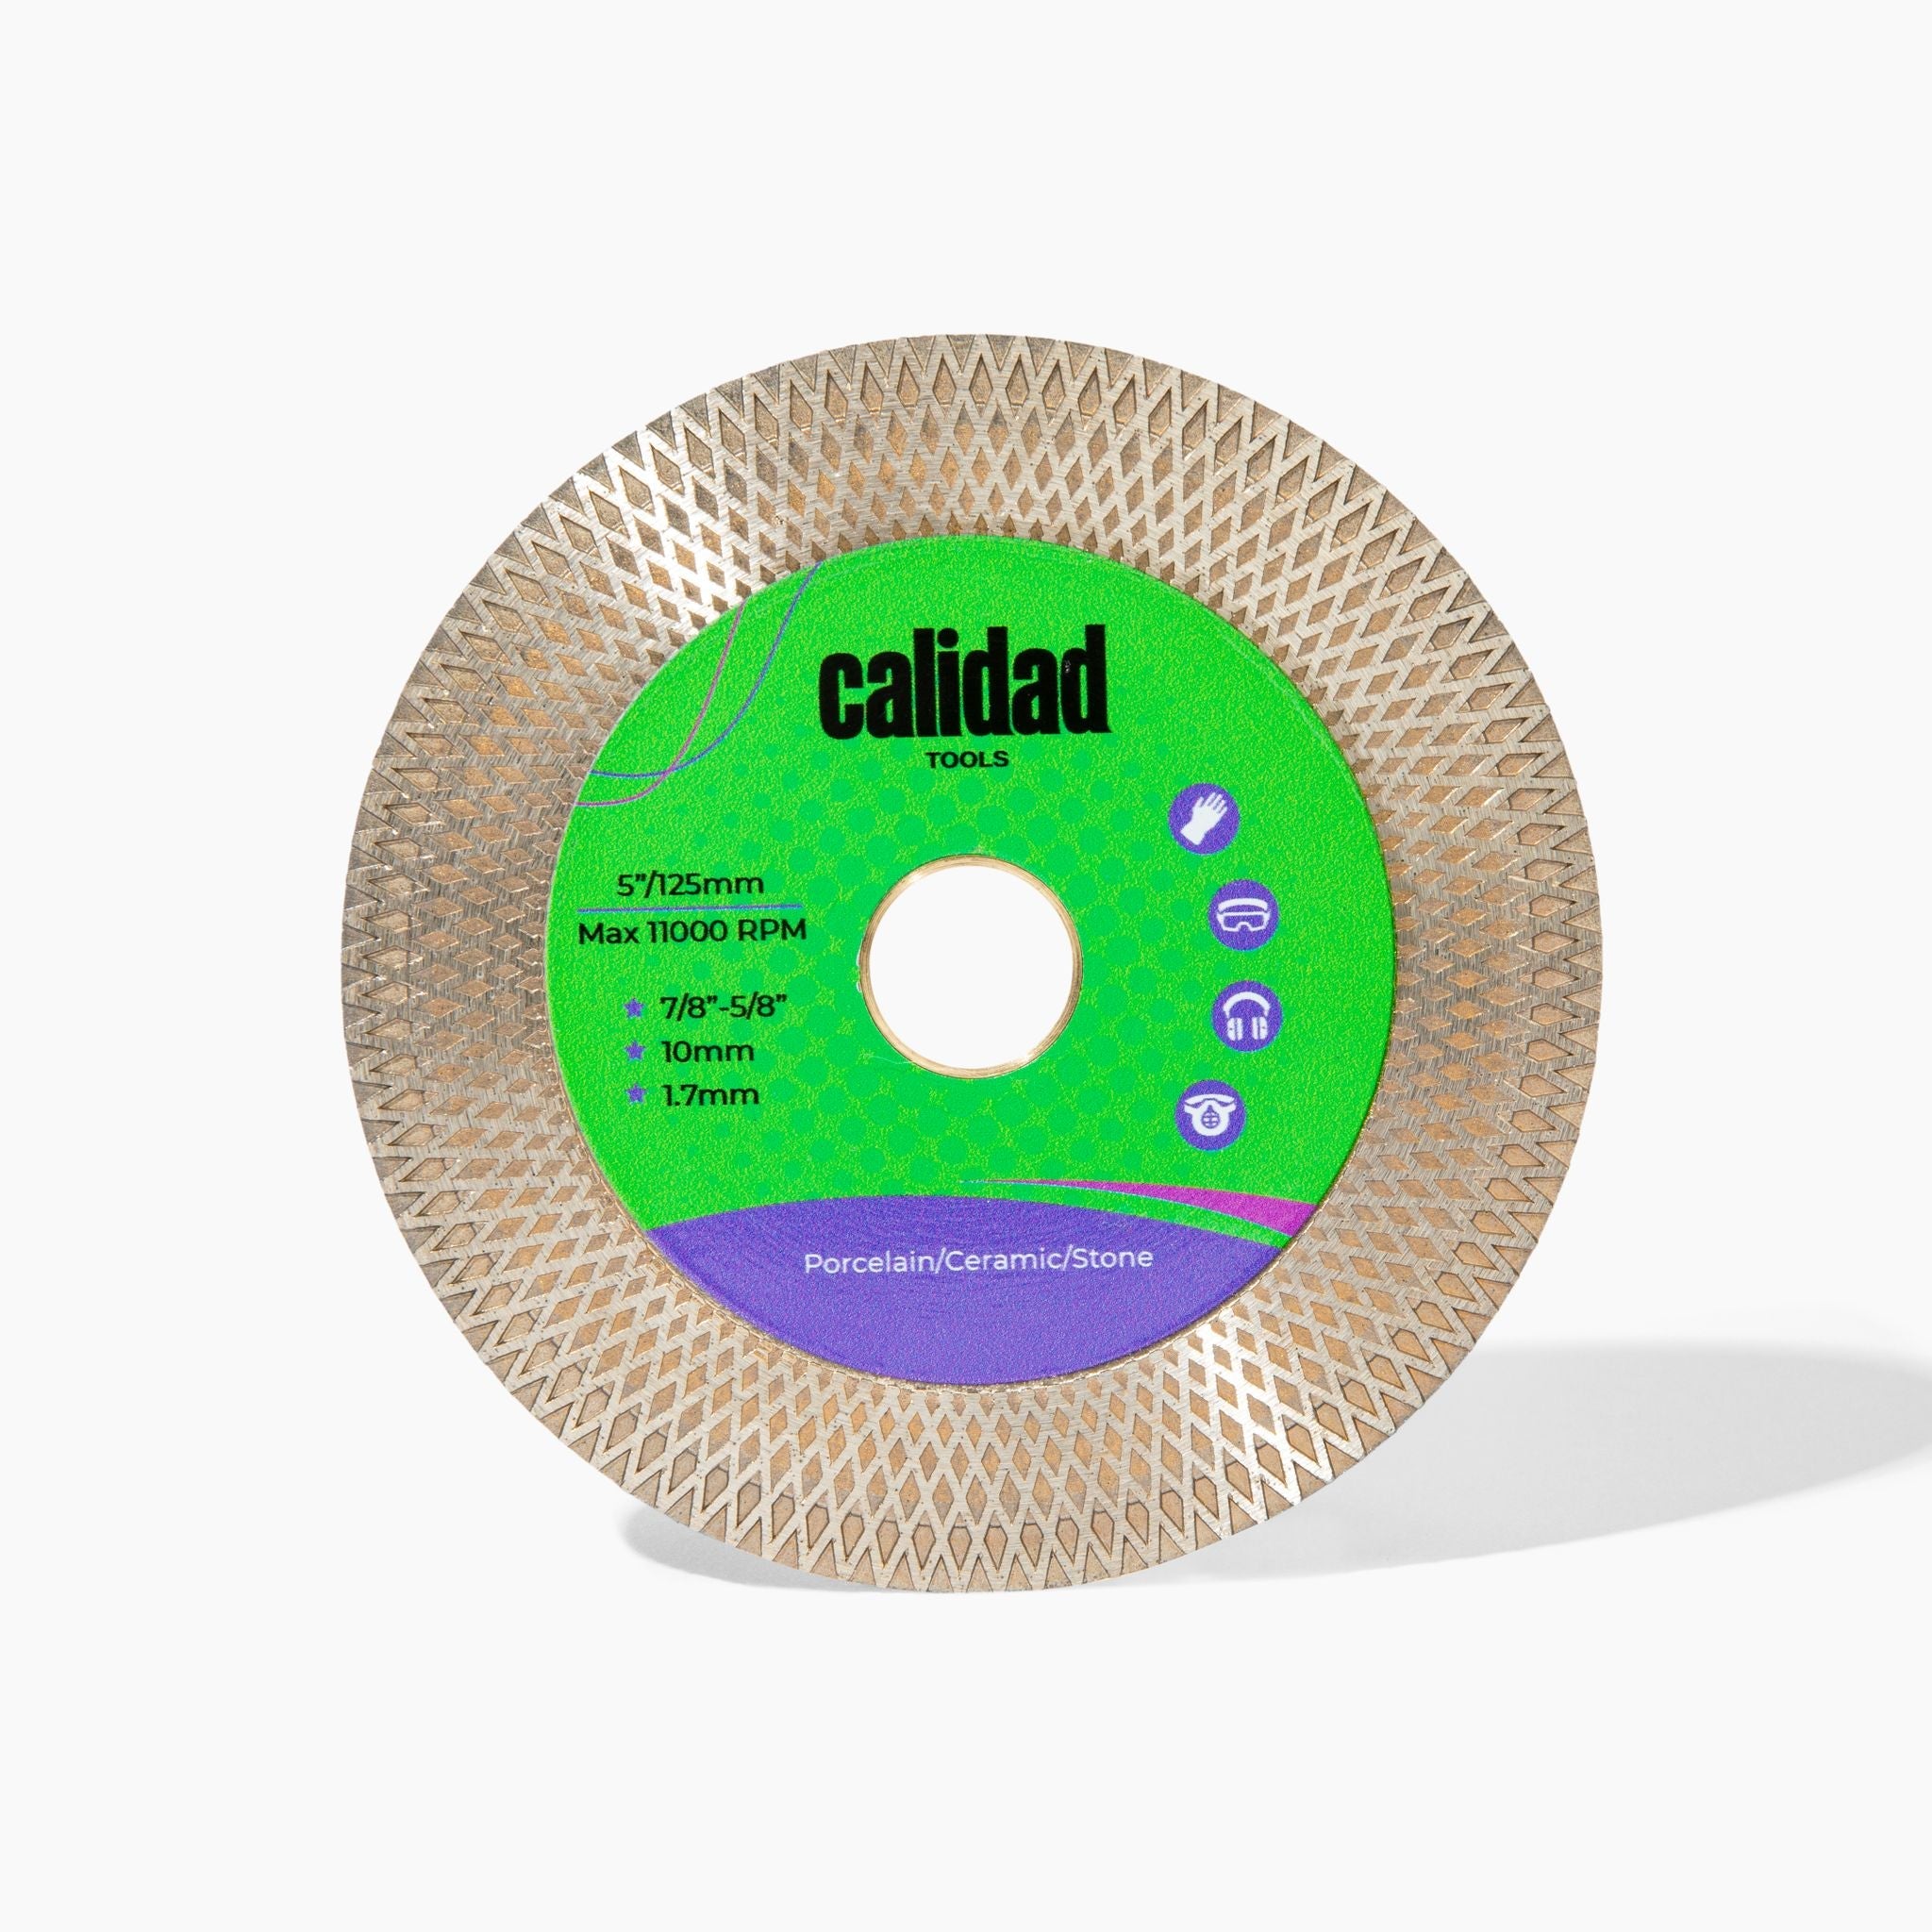 Calidad 5" Turbo Mesh Cutting & Shaping Blade "Durty Kurt" (Flangeless)